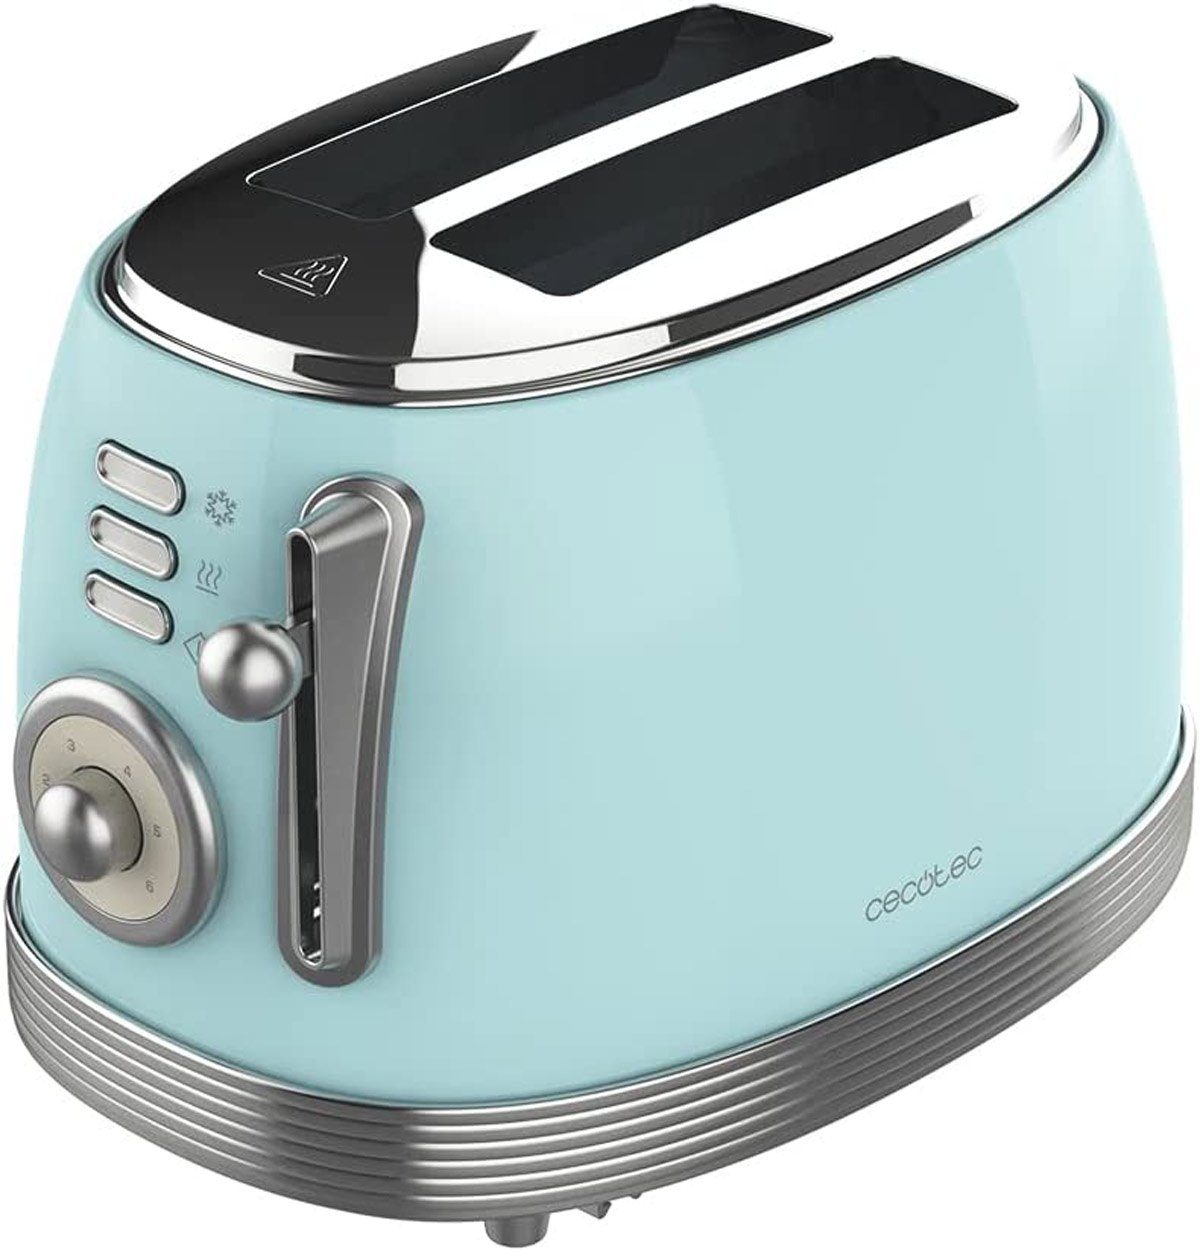 W 850 03208 Retro Toaster blue Cecotec light Design,